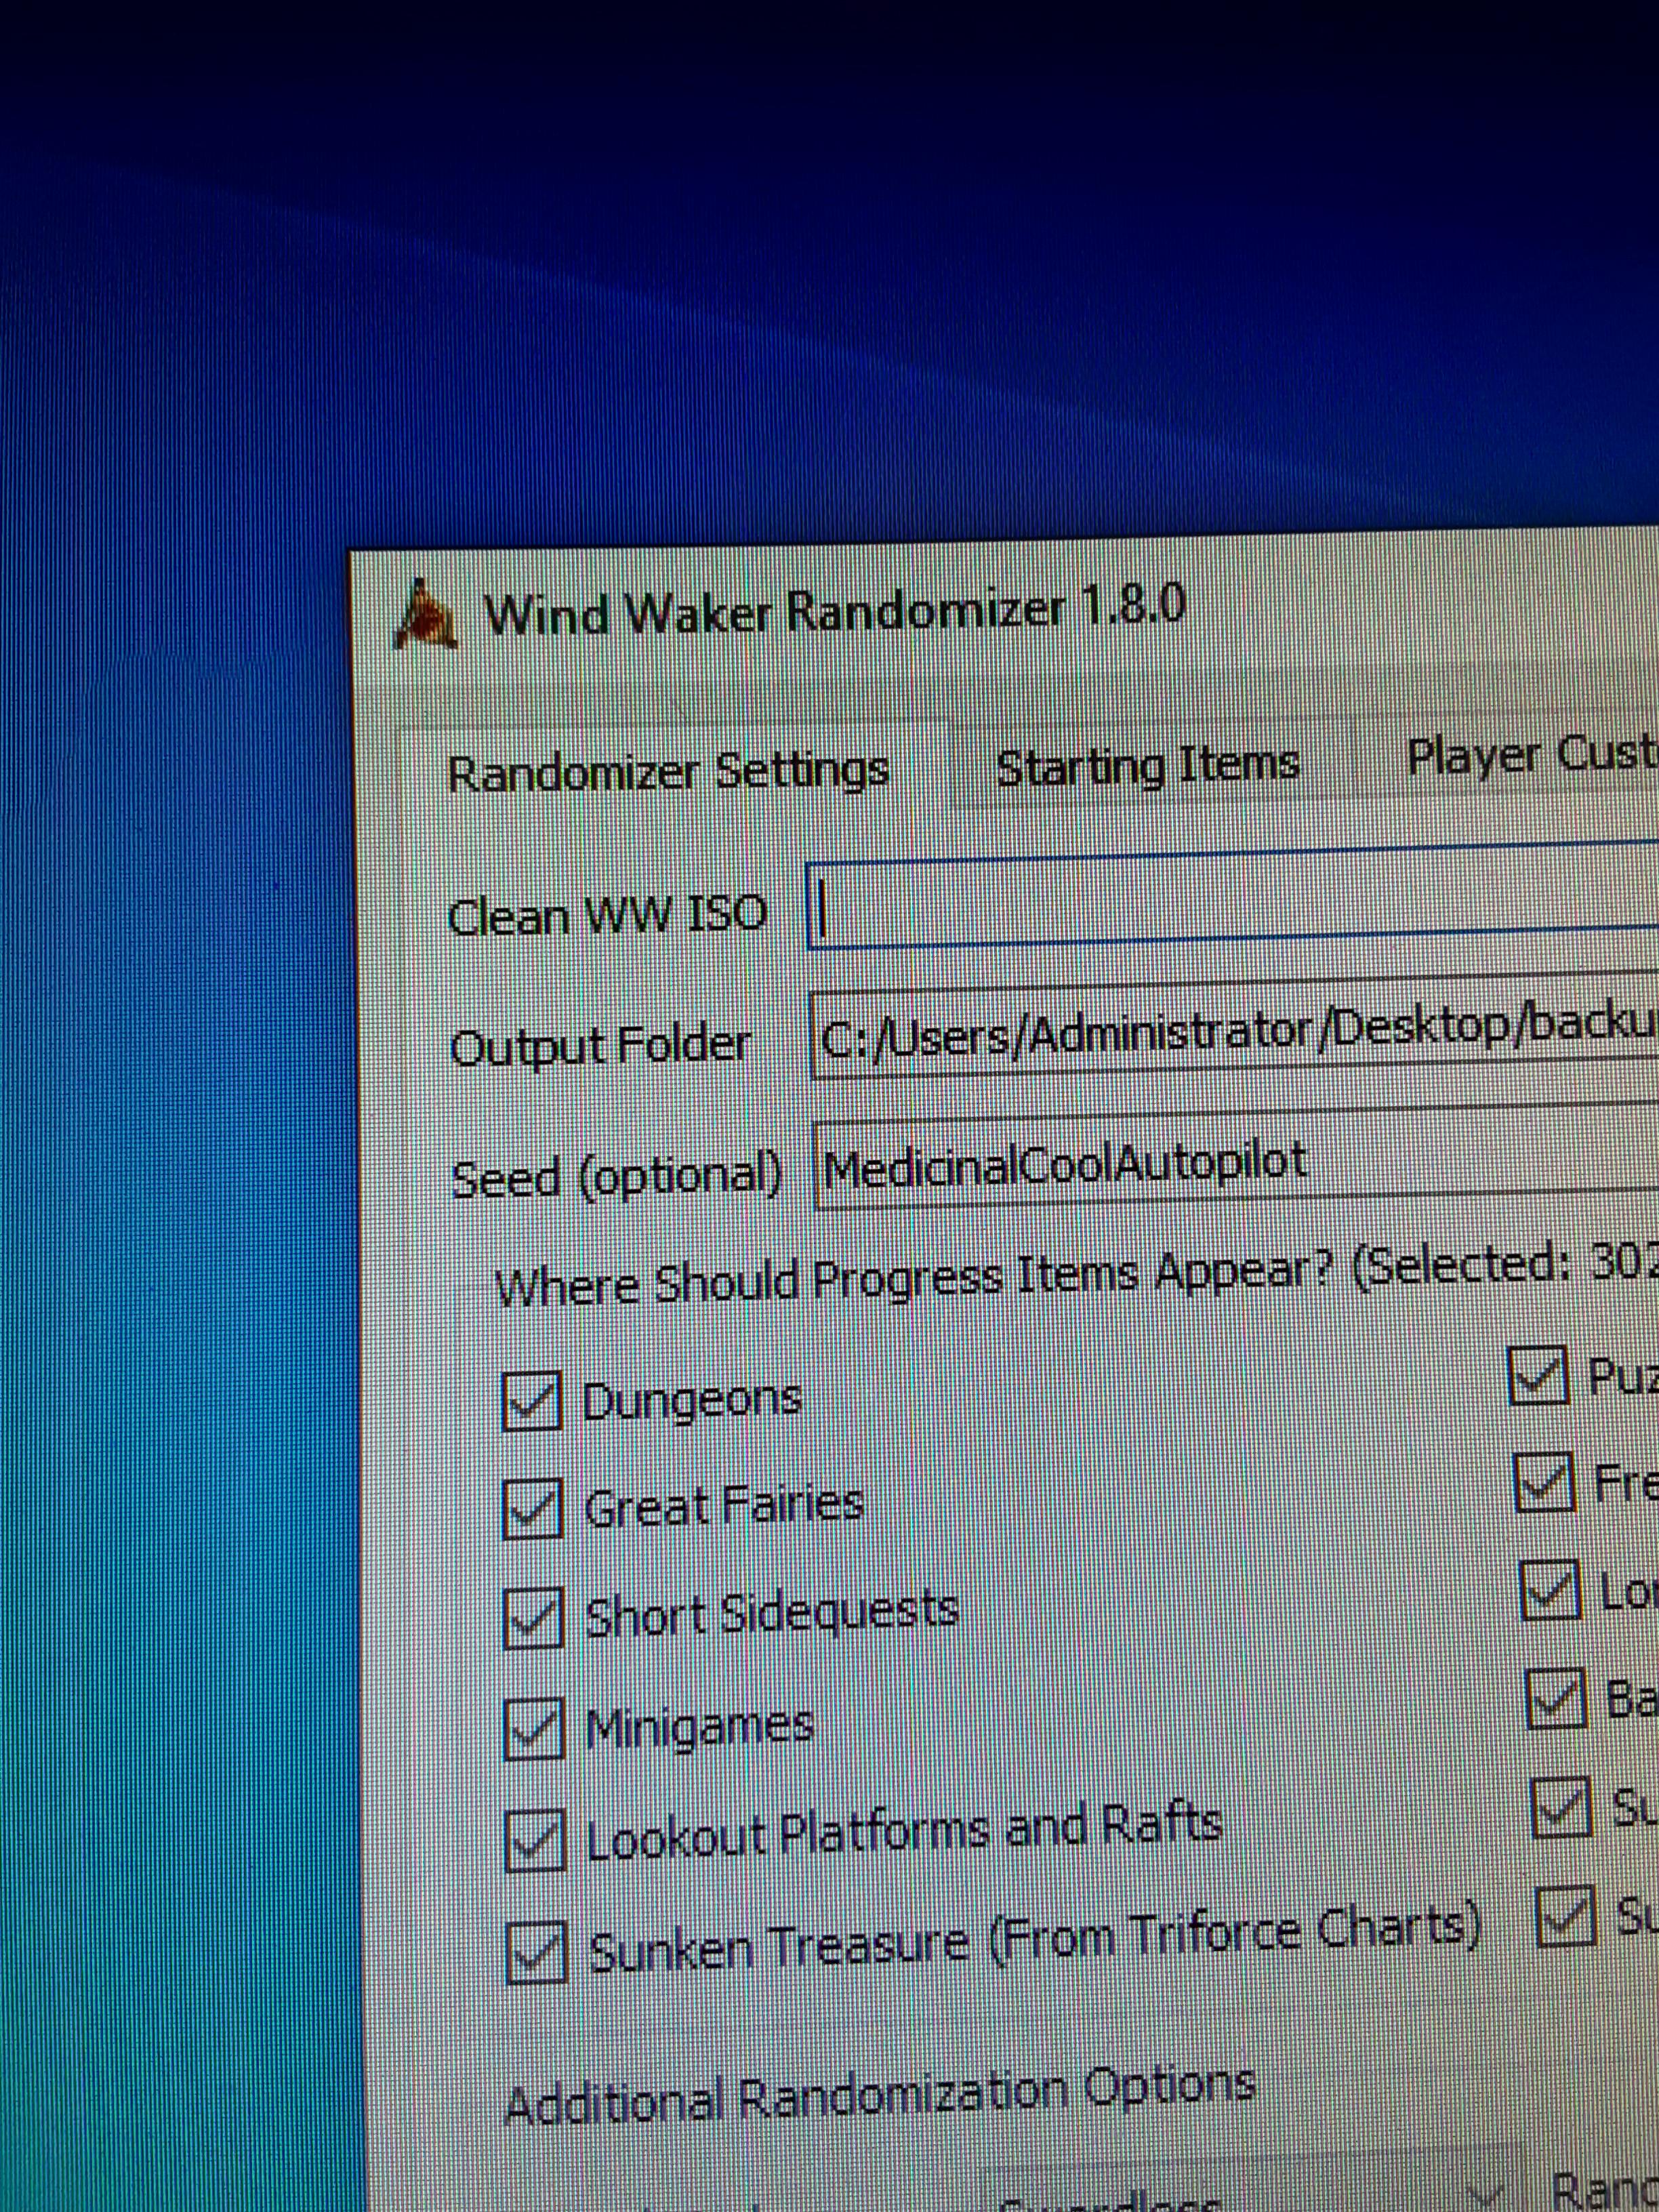 wind waker randomizer iso download